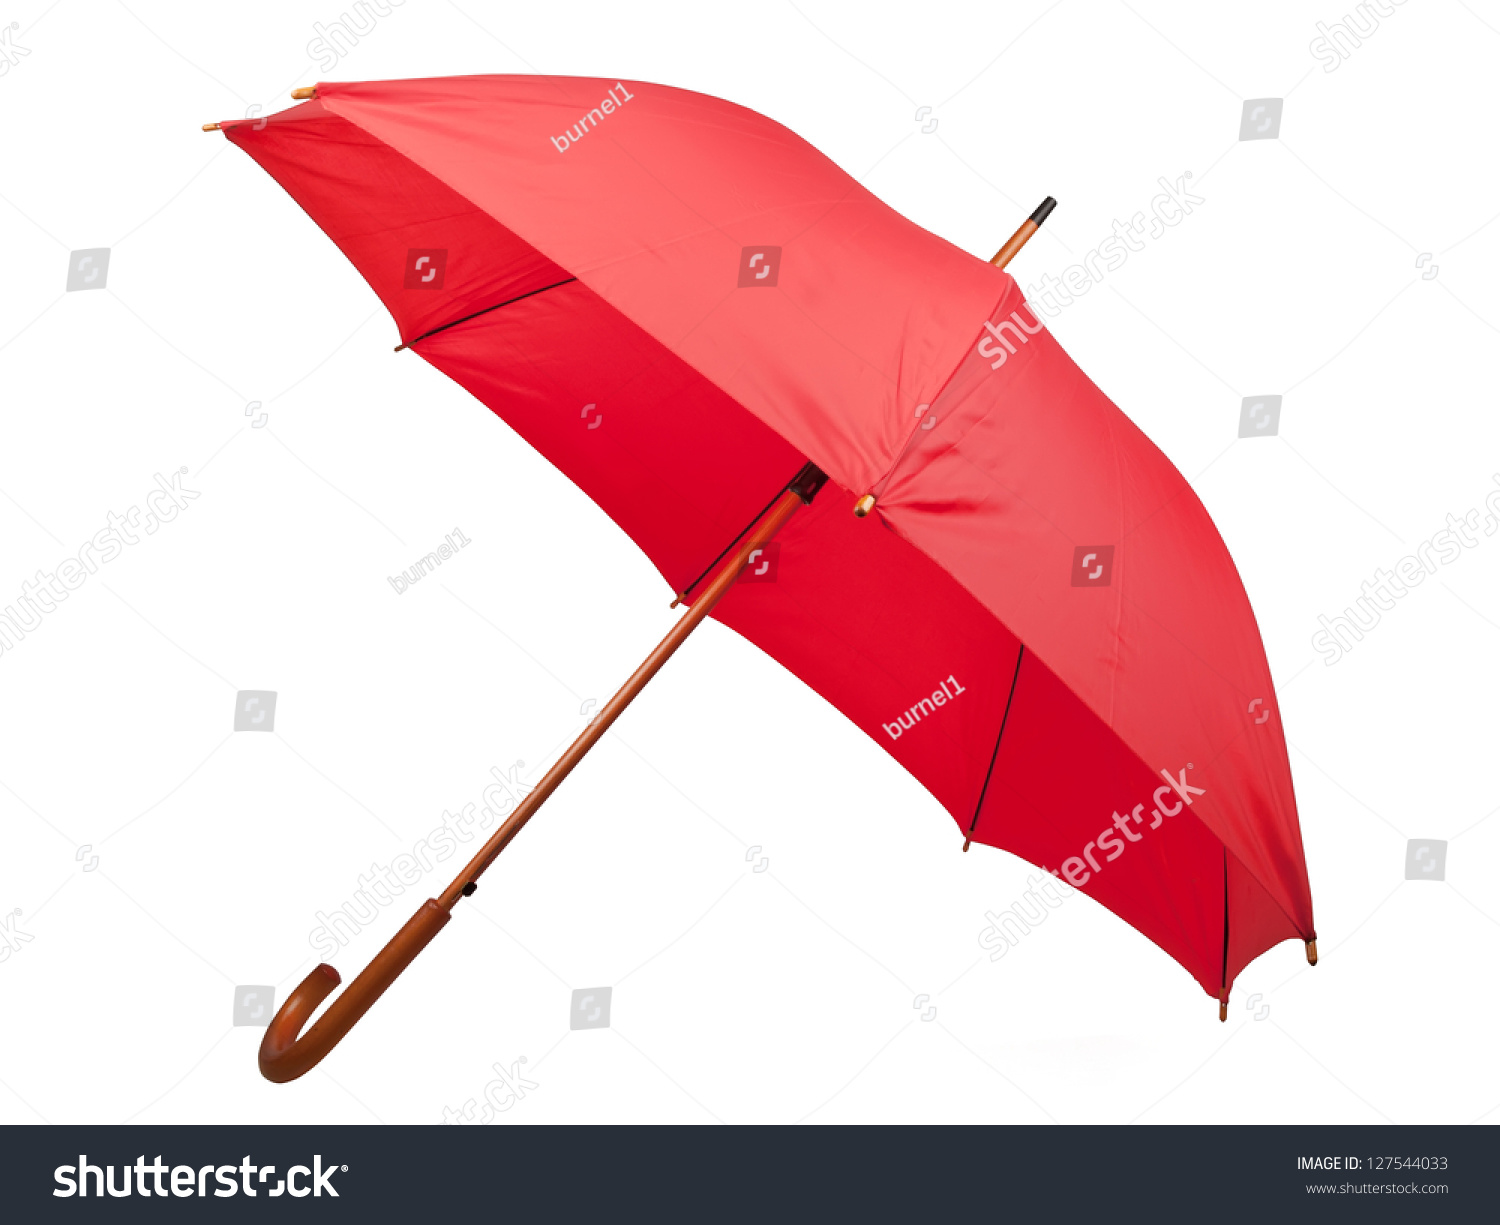 red umbrella isolated on white background #127544033